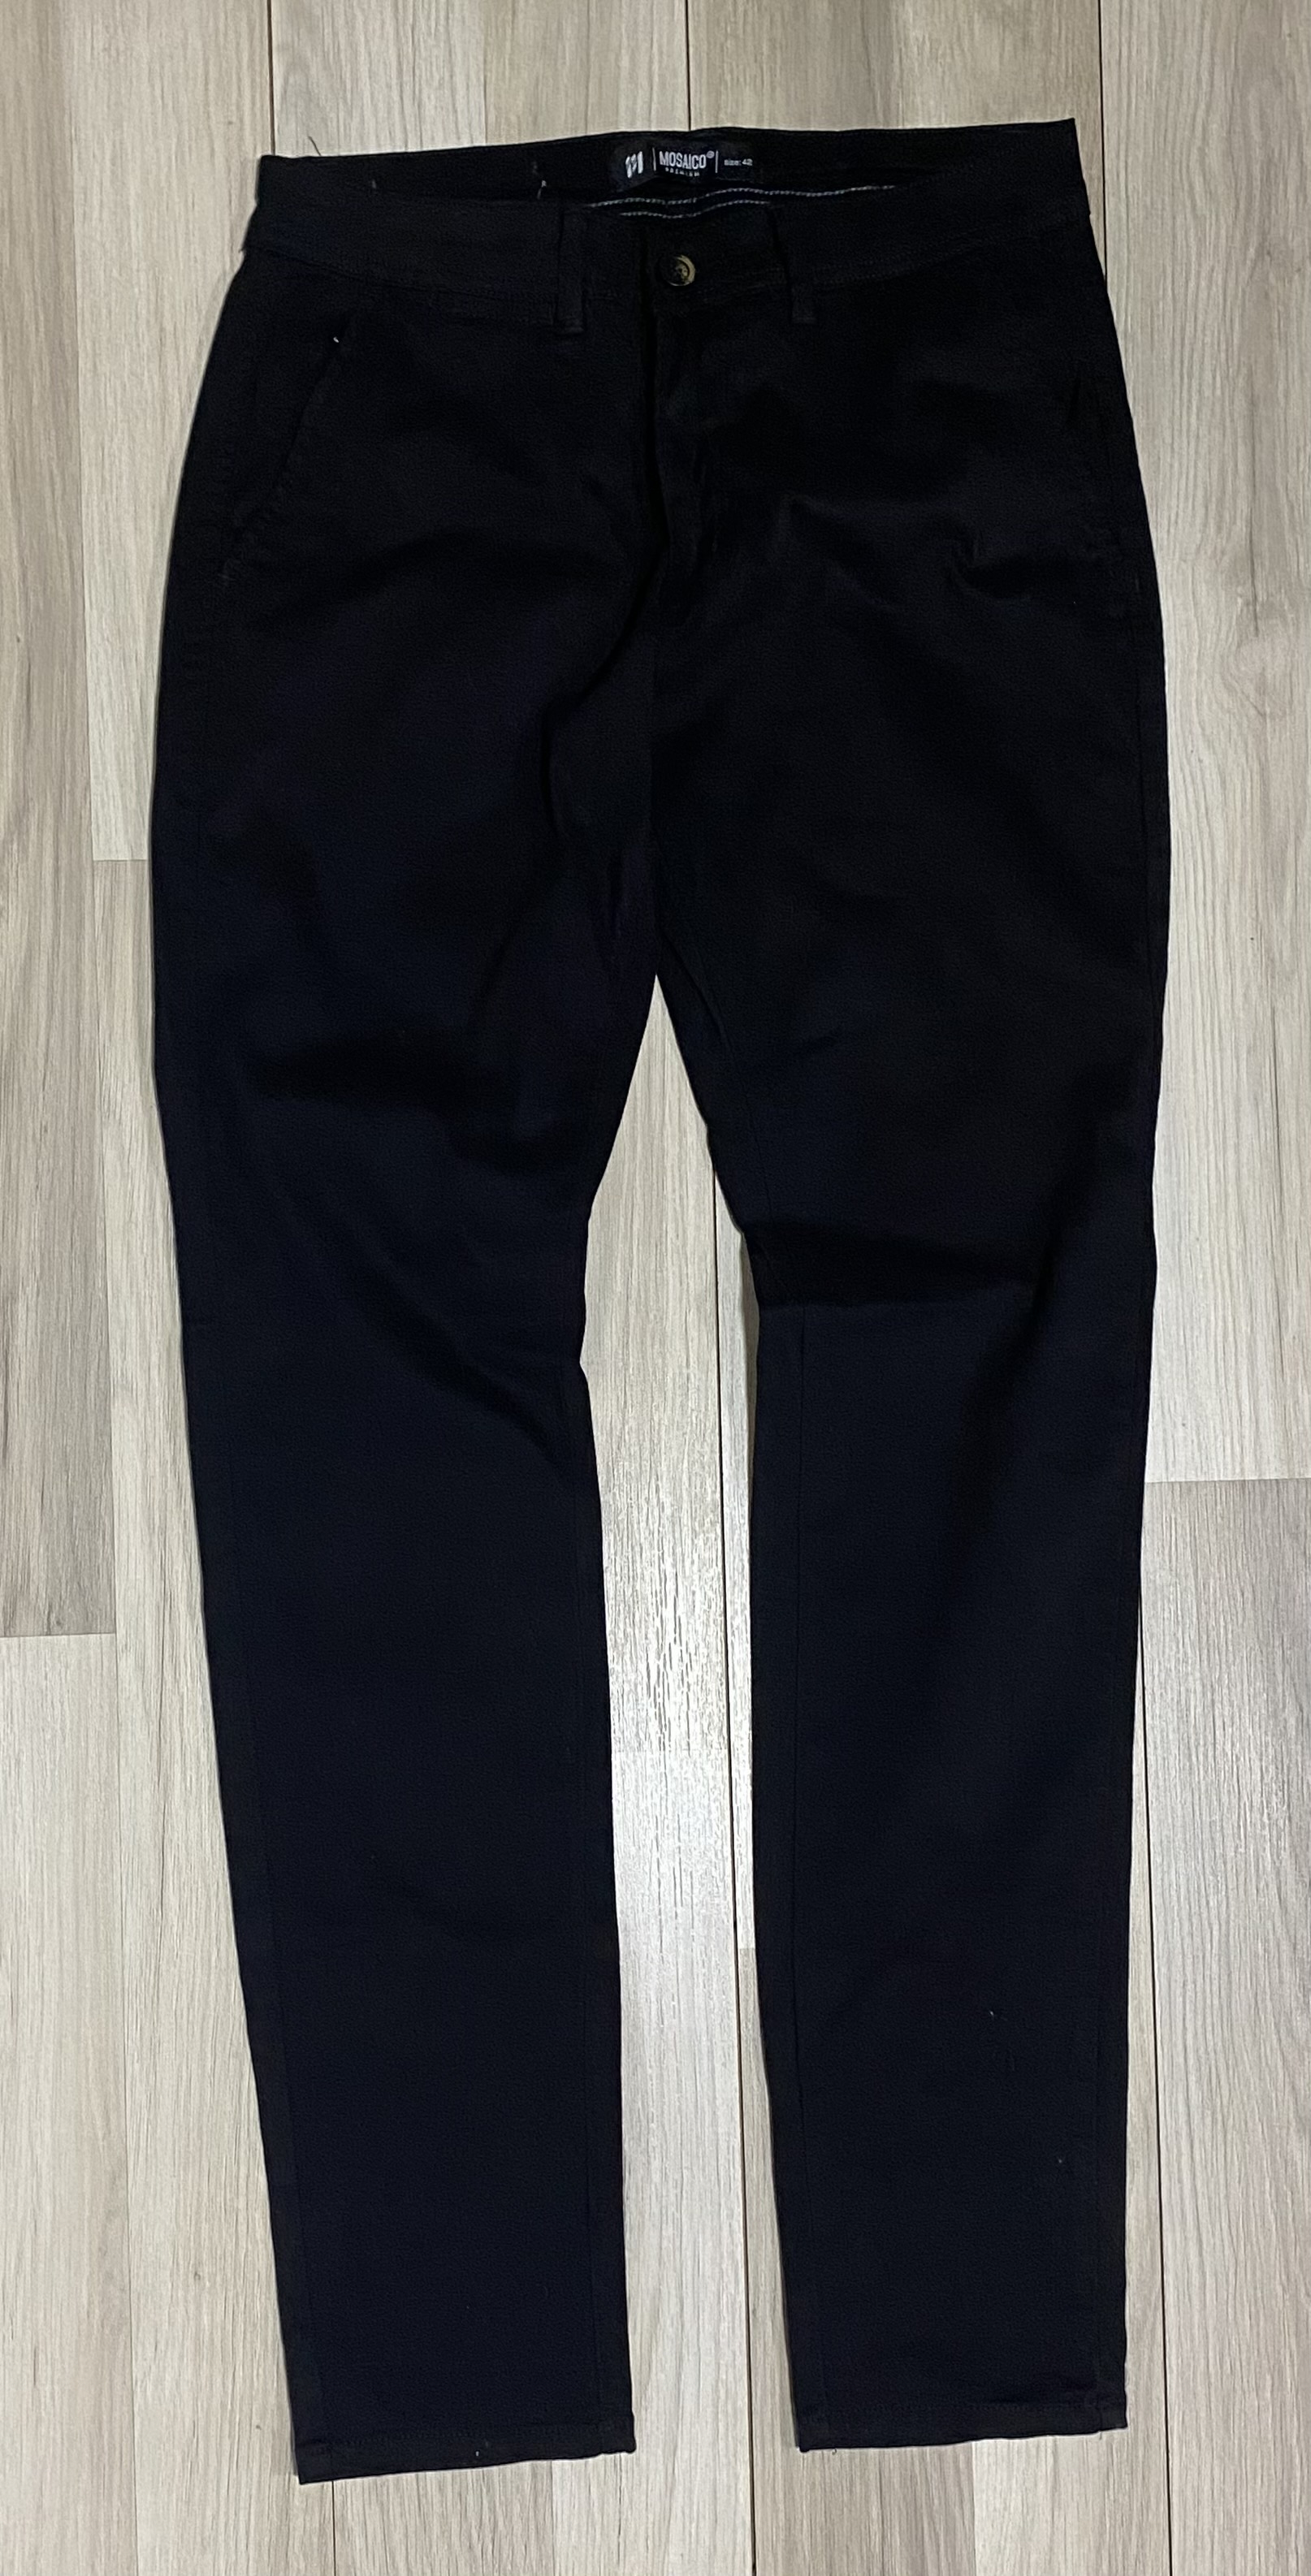 Pantalon tipo chino negro slim fit elasticado